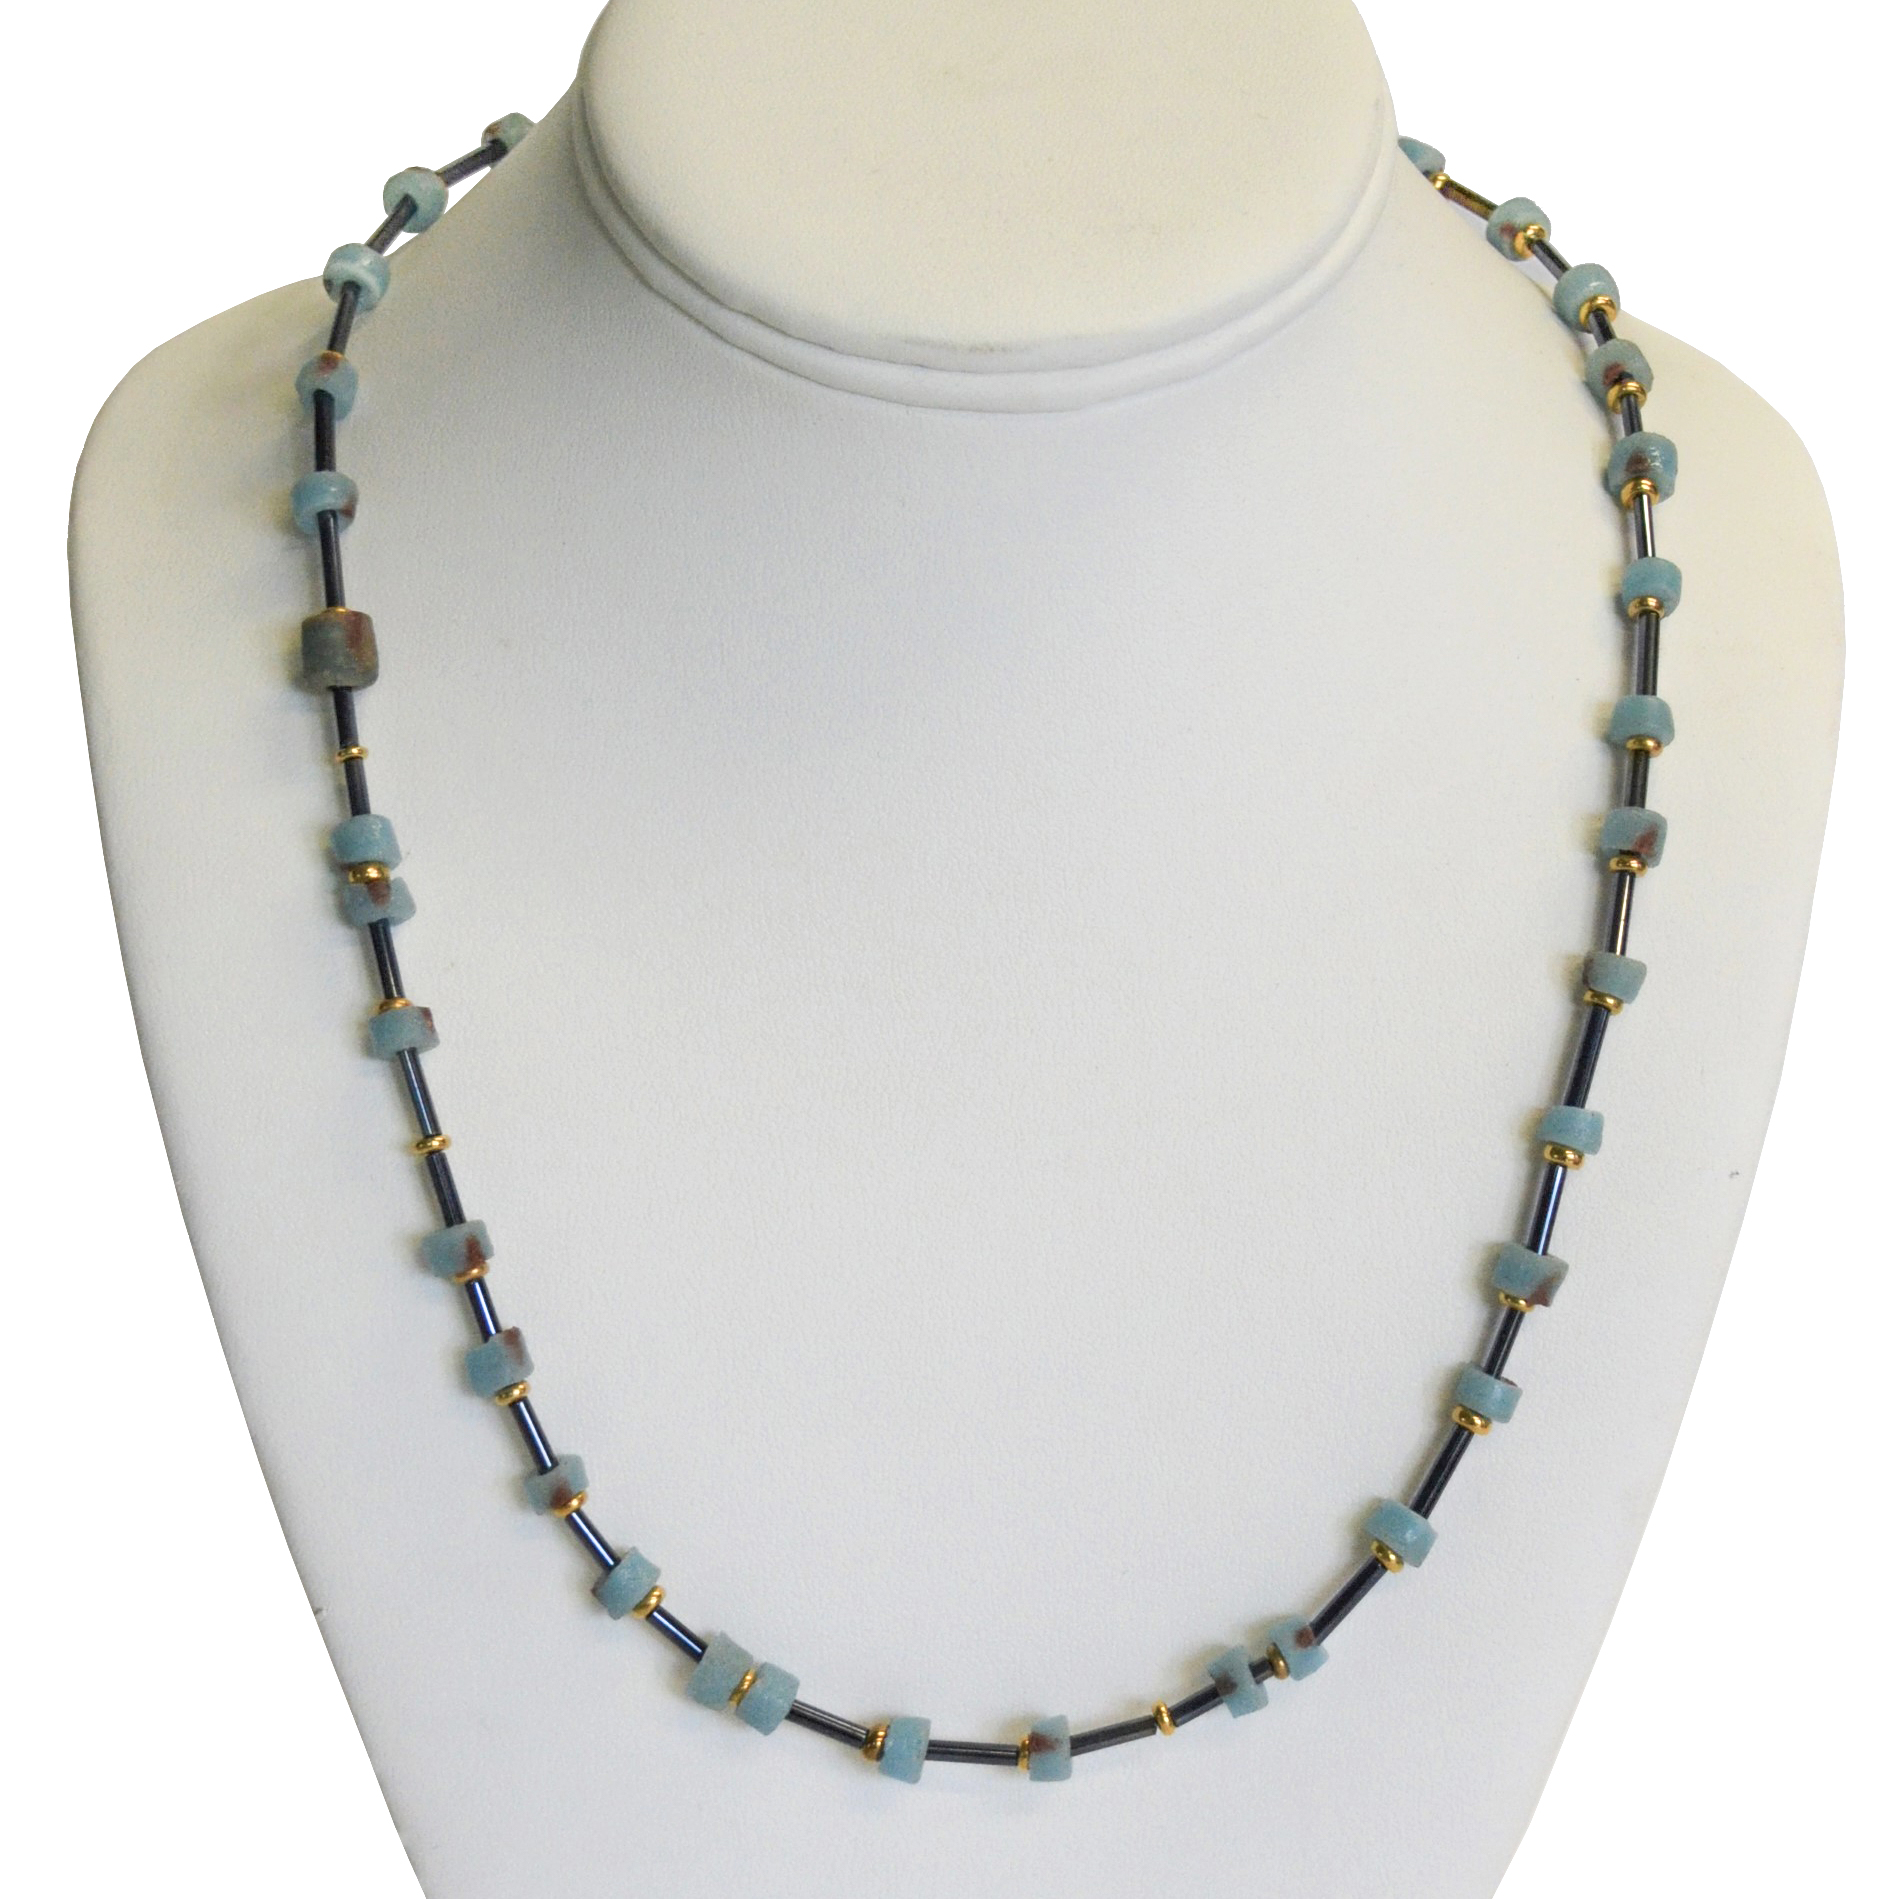 Glass beads necklace by Josie Sosa